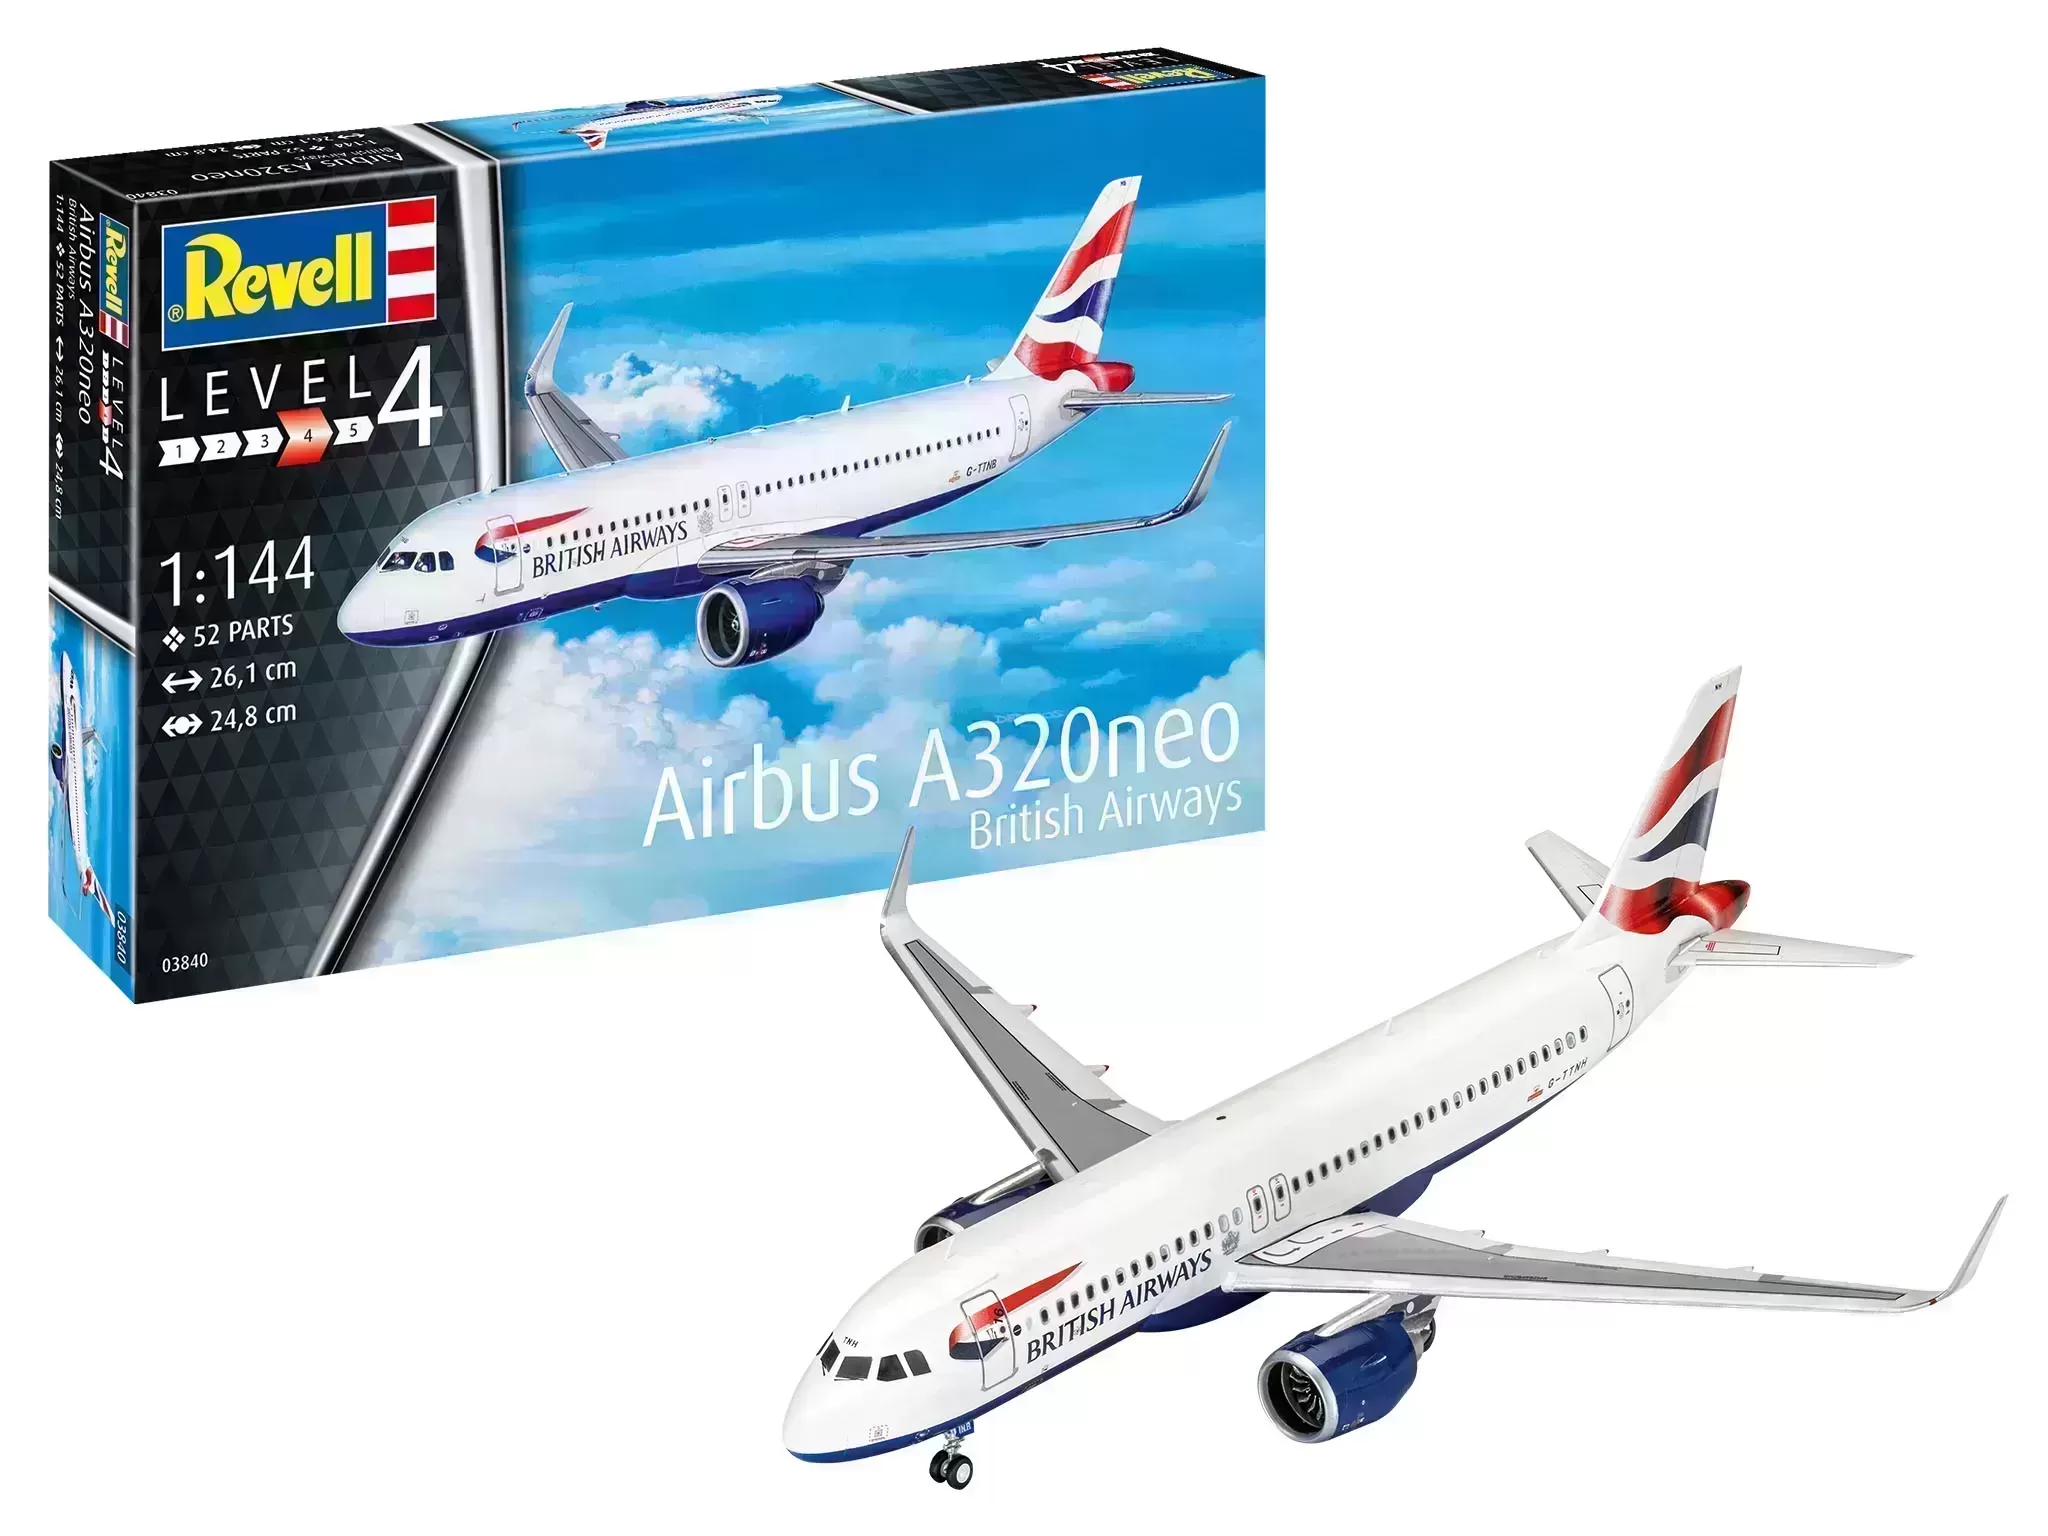 Modelset Airbus A320 neo British Airways - 1:144